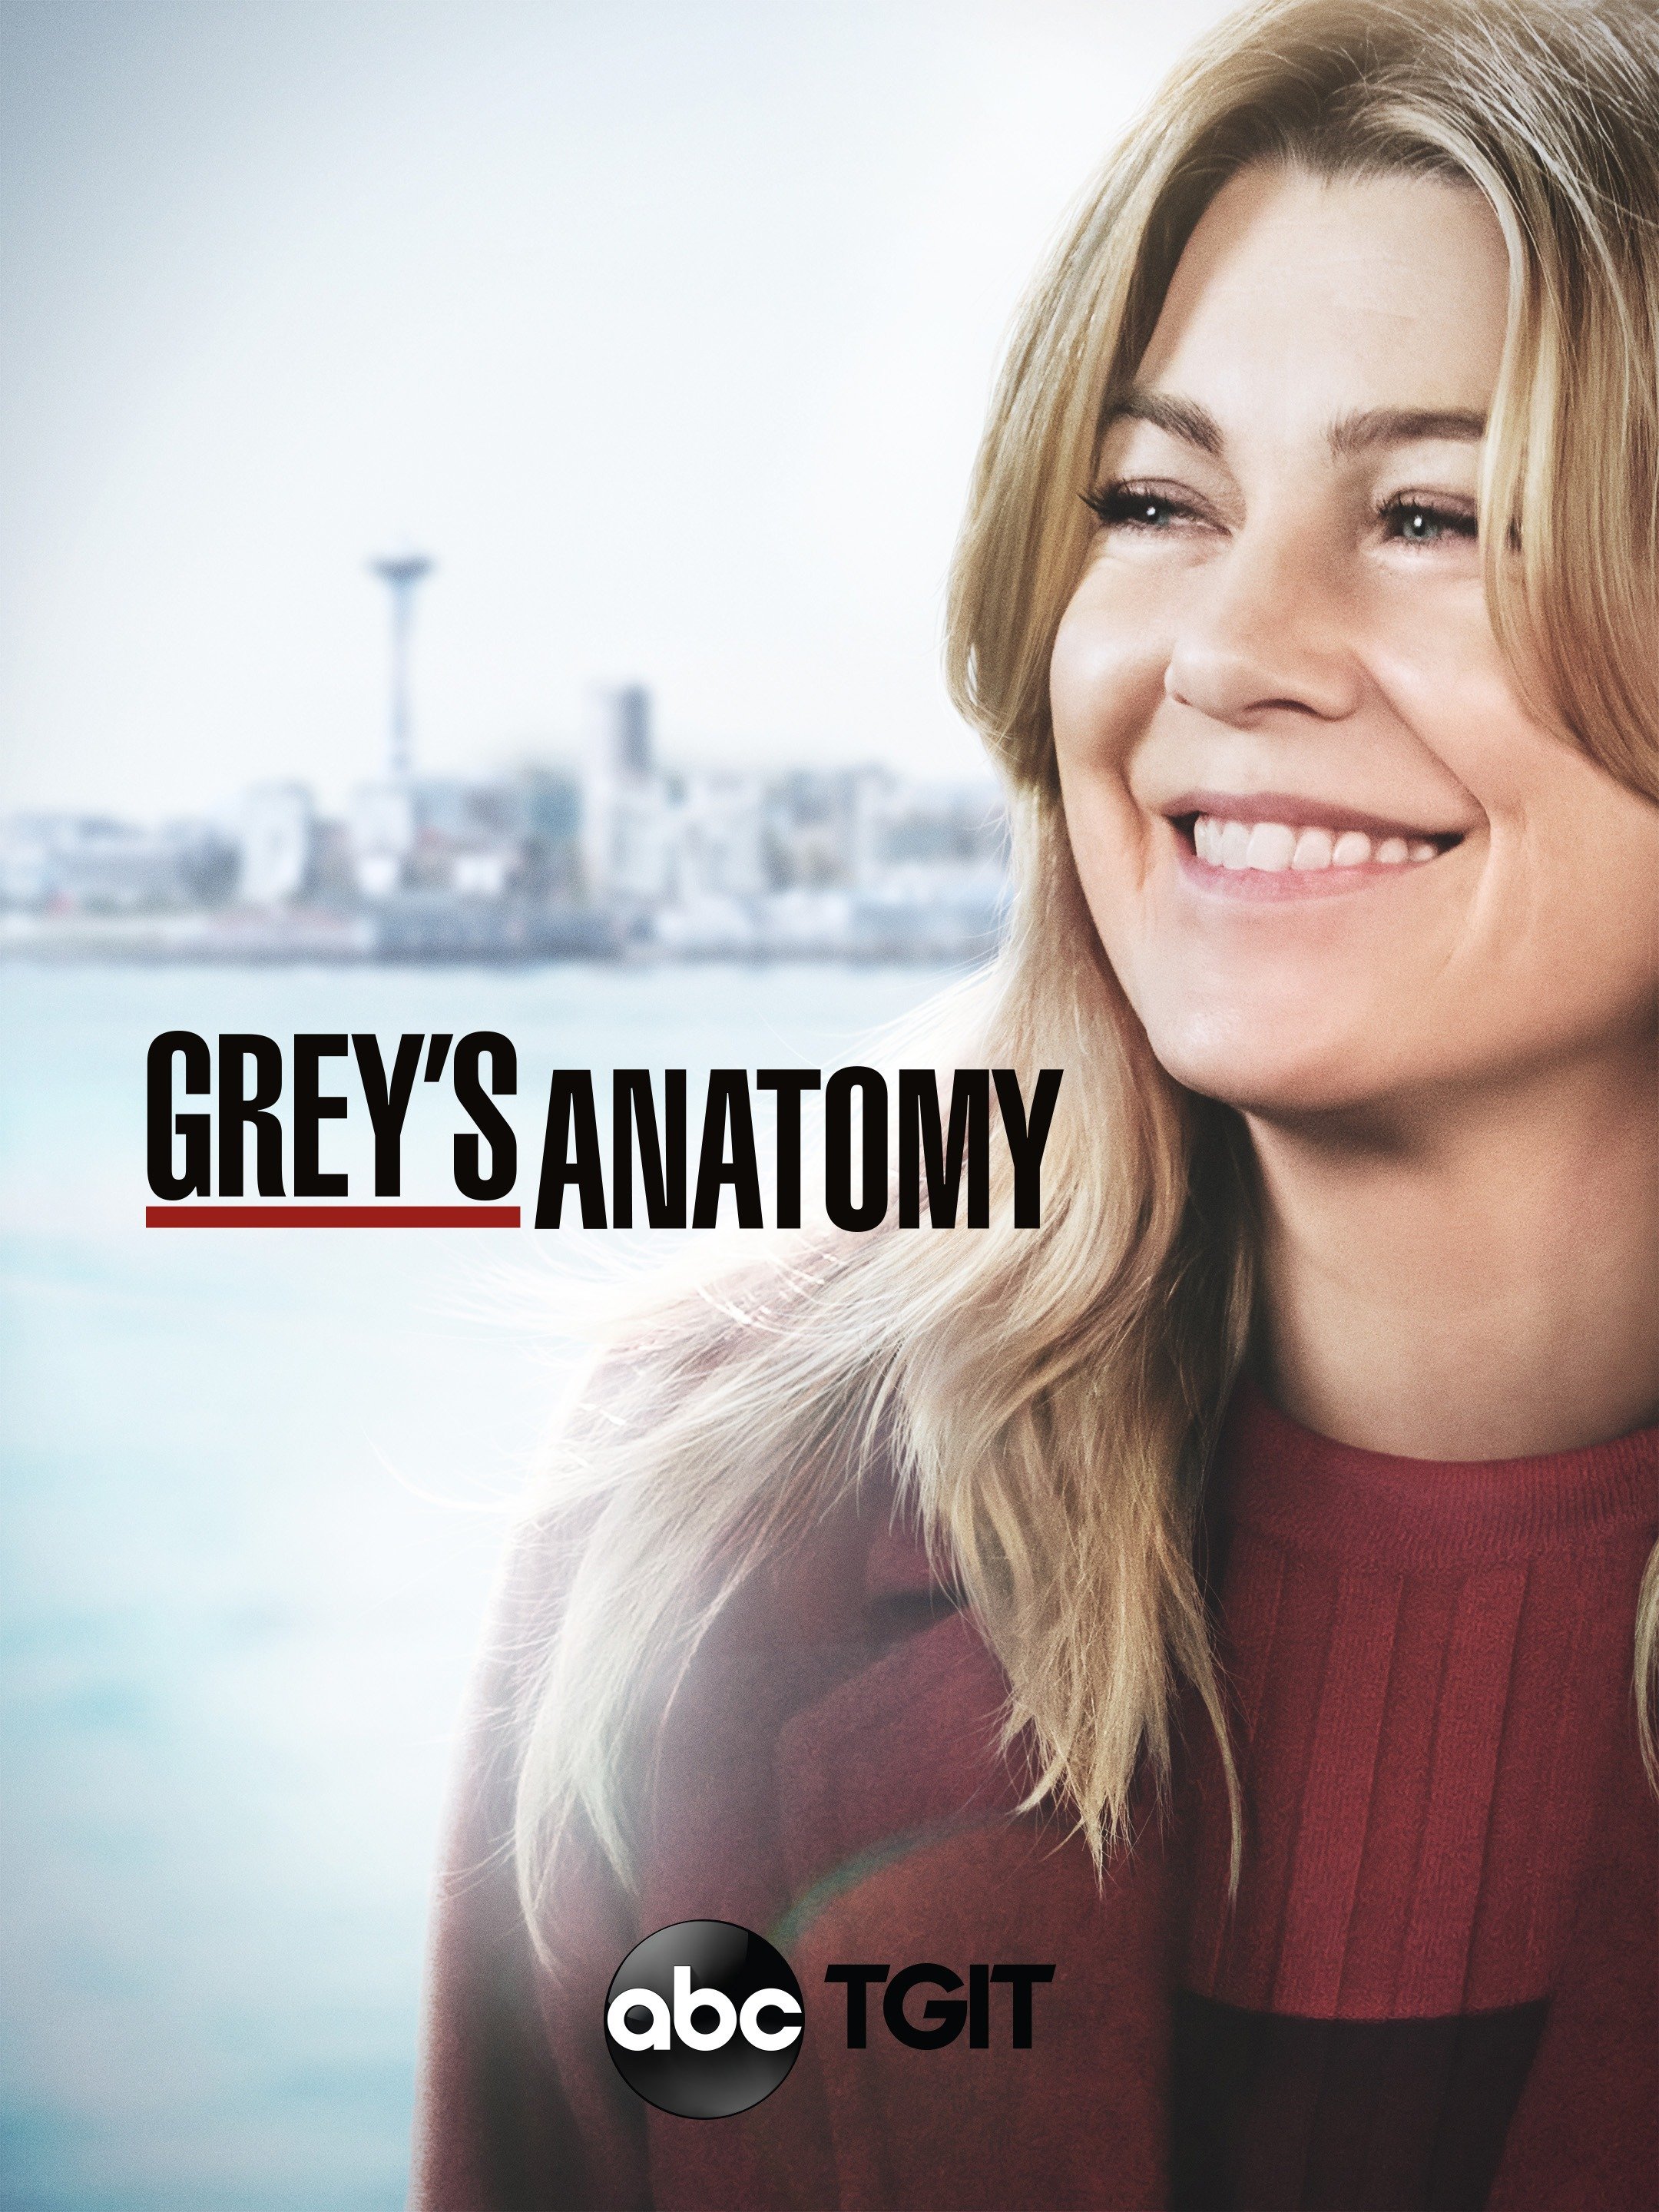 Greys anatomy season 15 episode 9 online air date